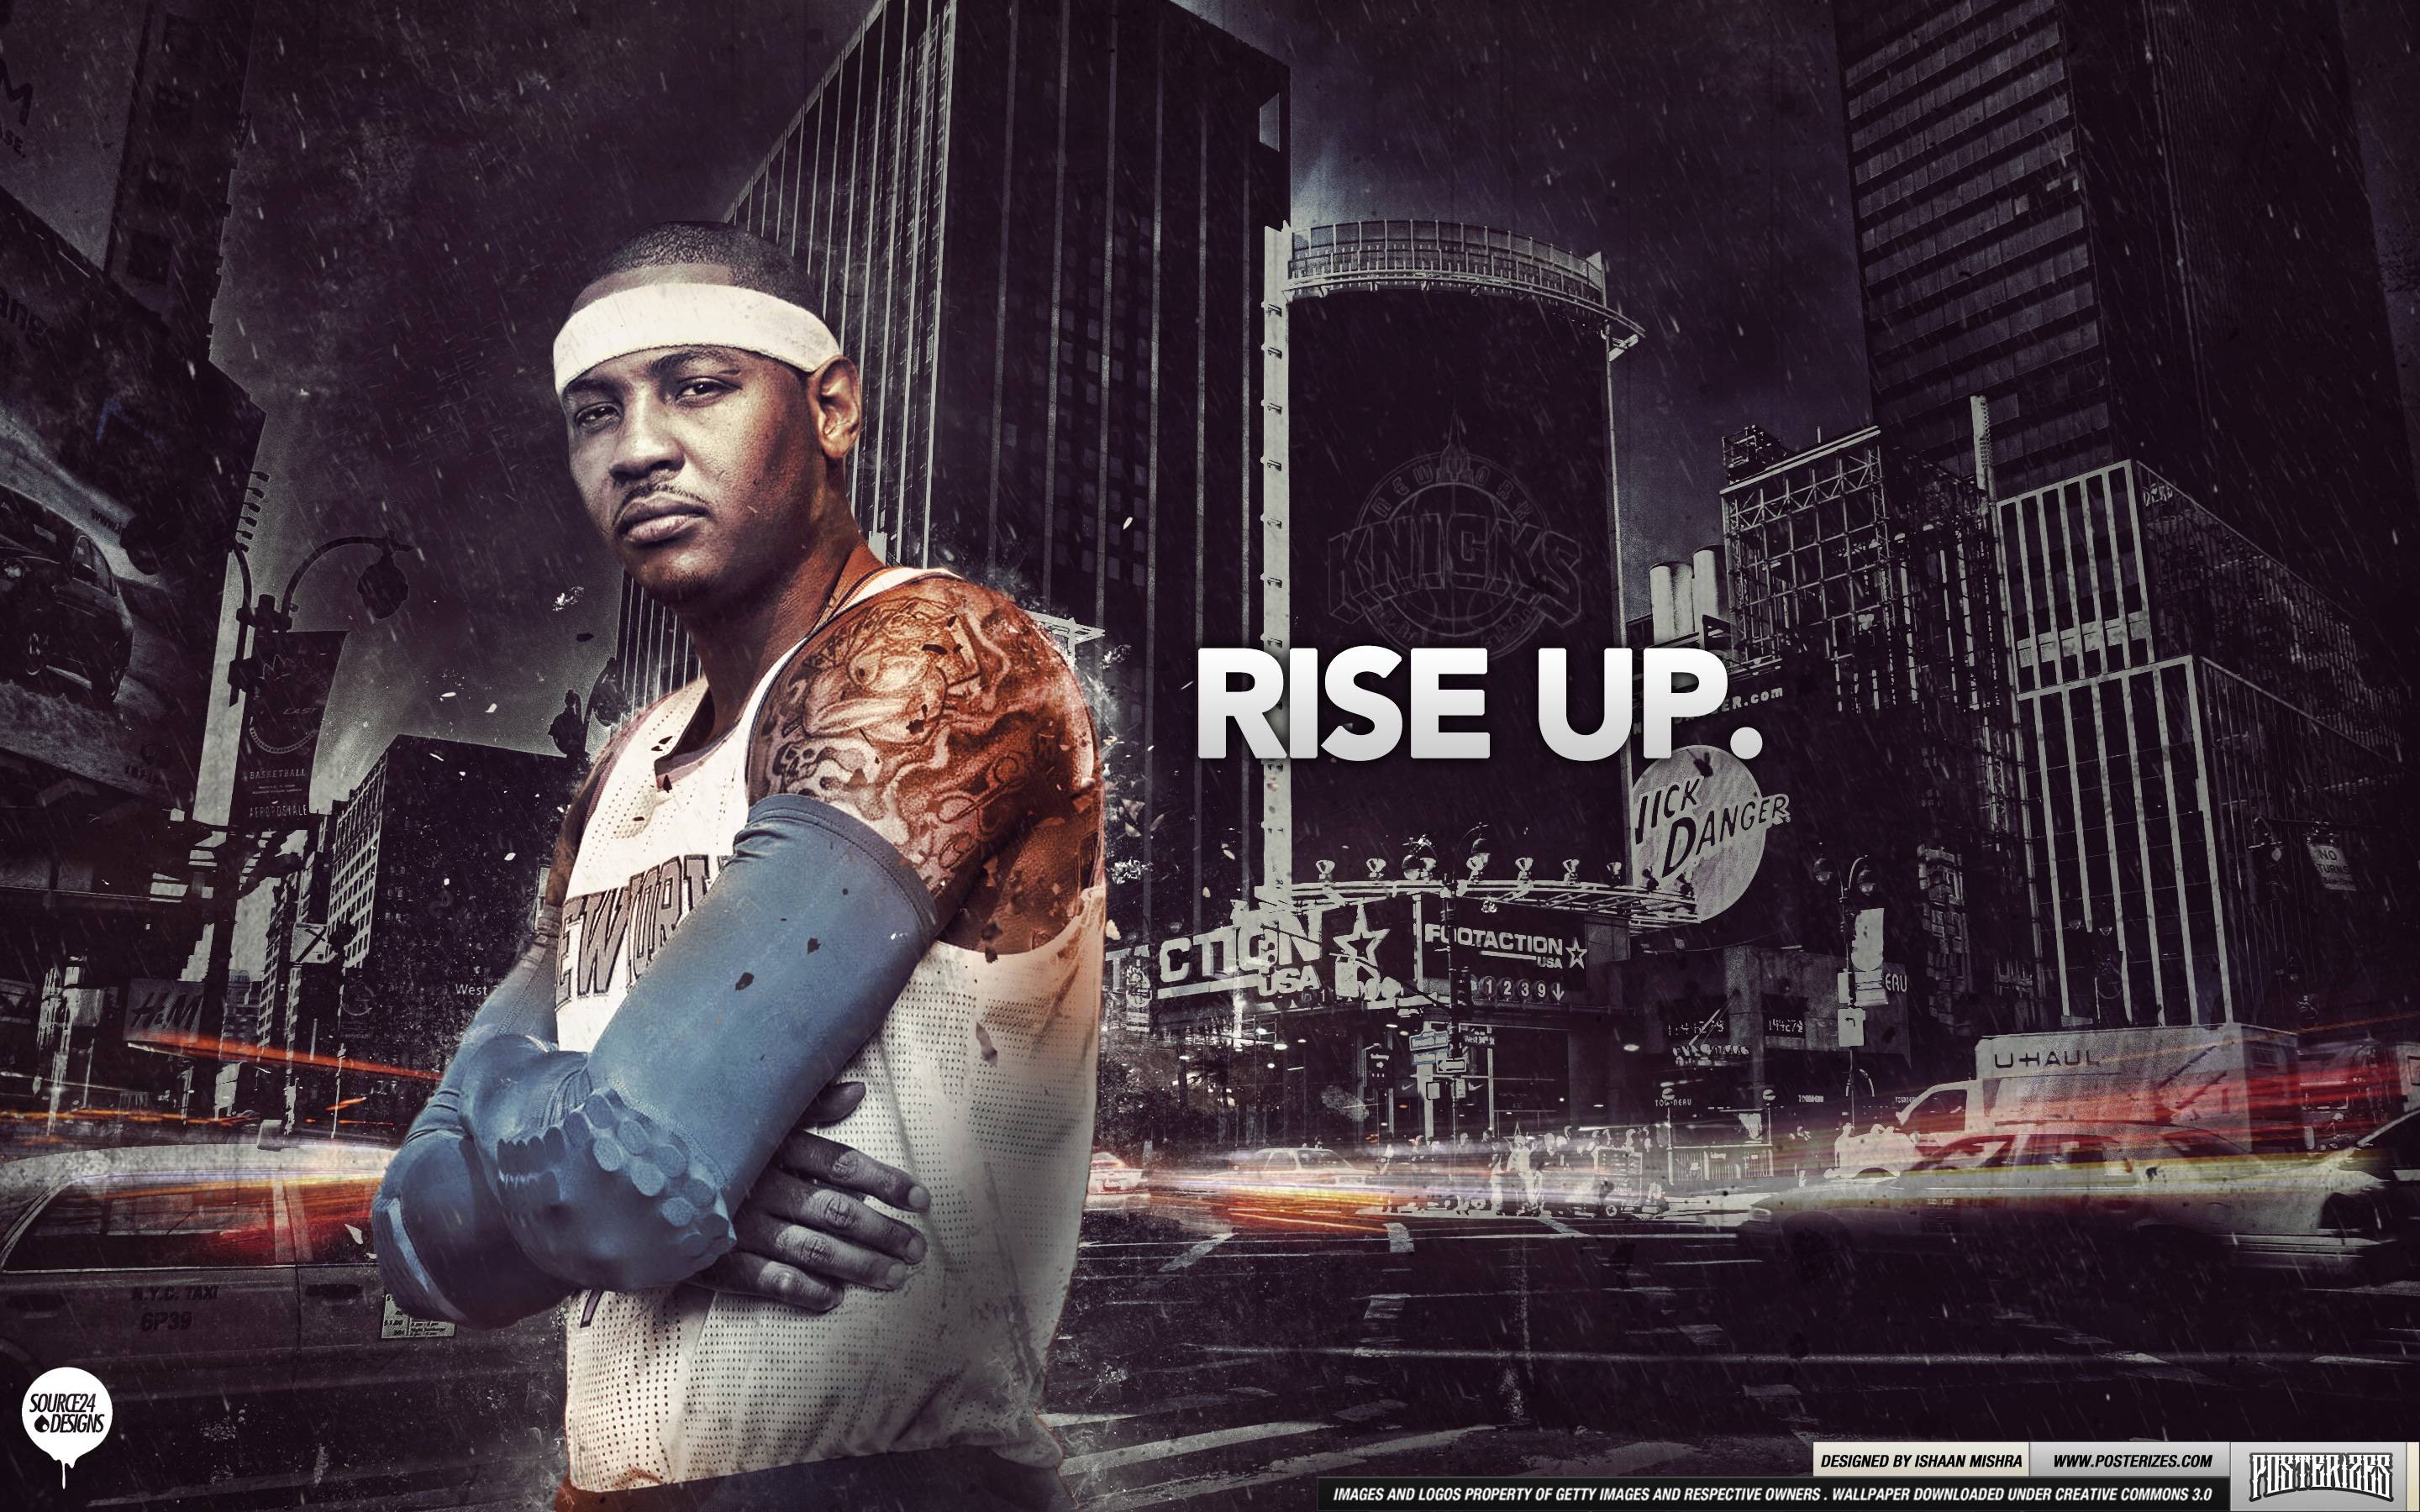 New York Knicks. Posterizes. NBA Wallpaper & Basketball Designs